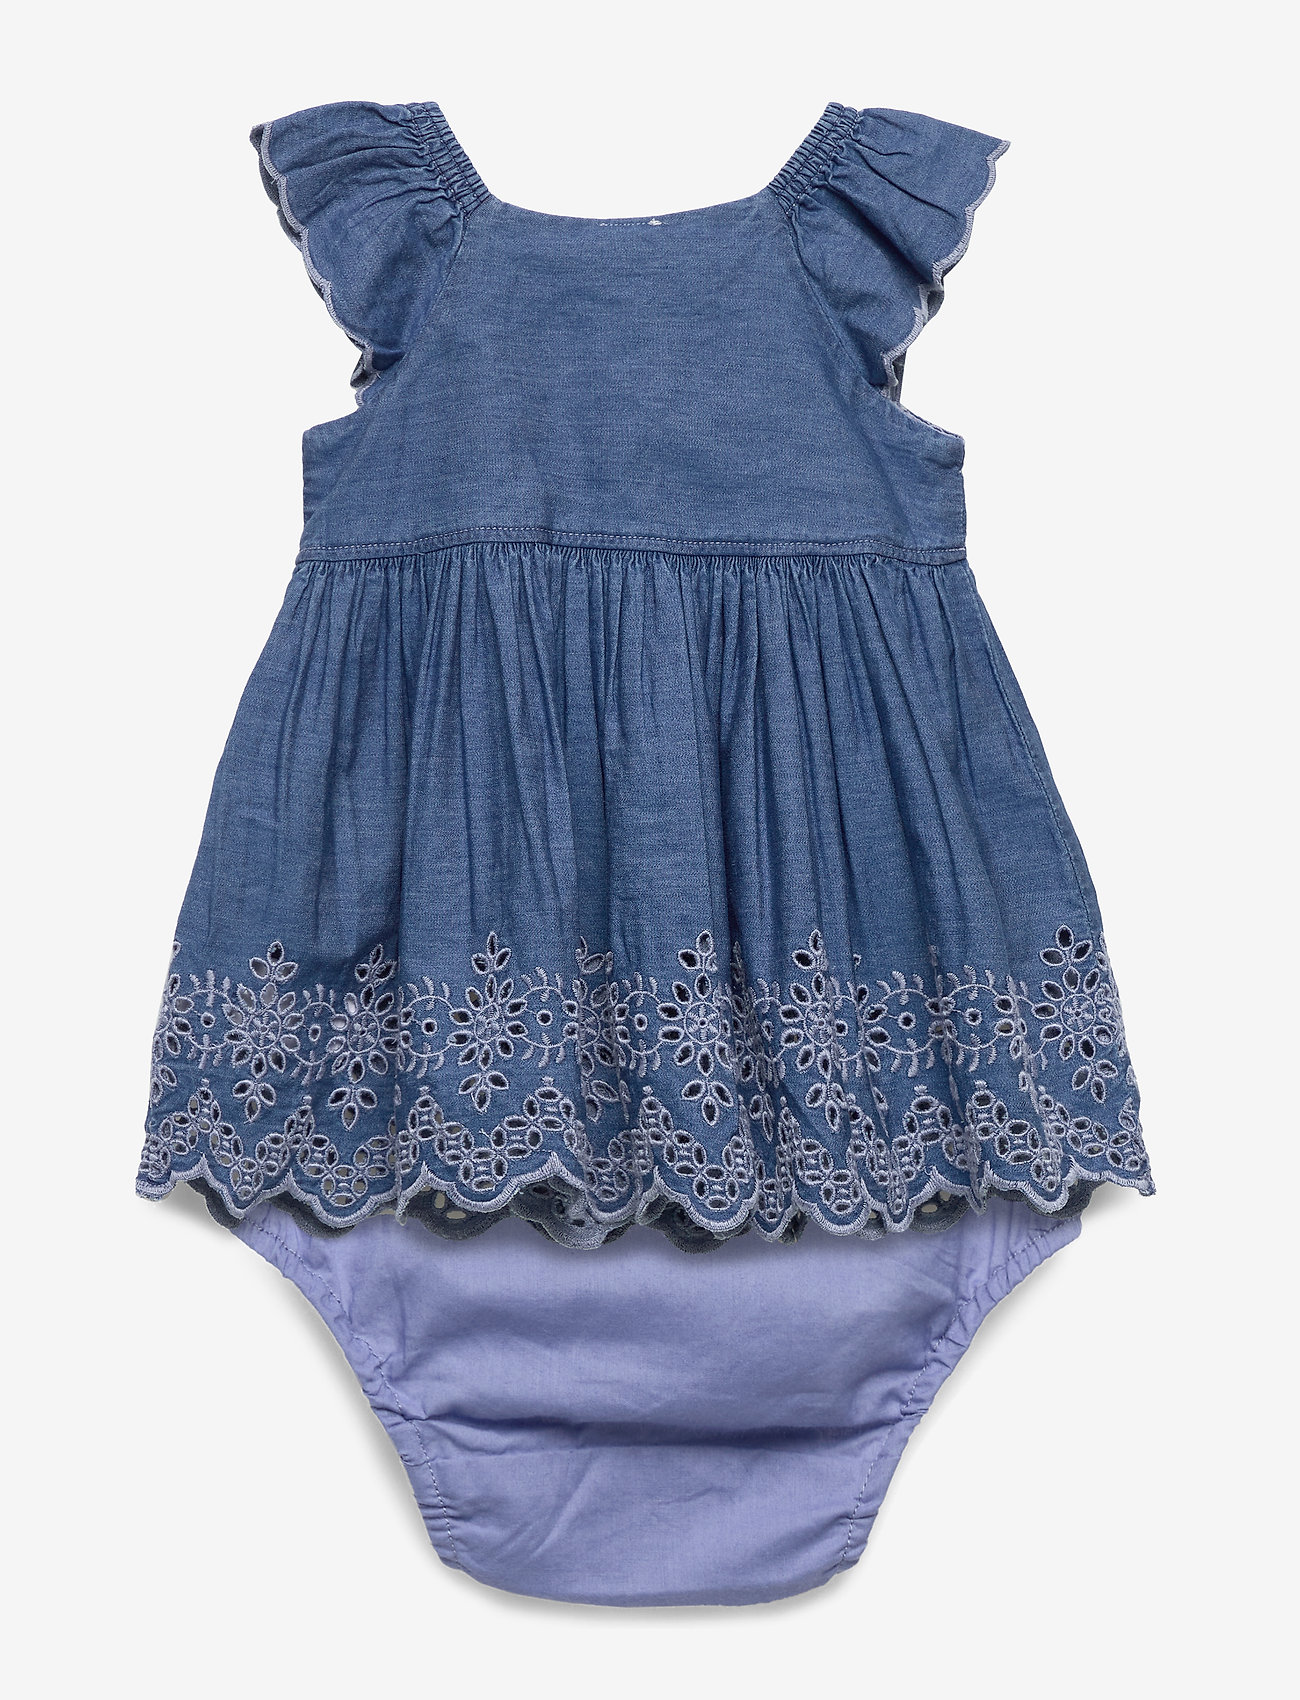 baby gap denim dress